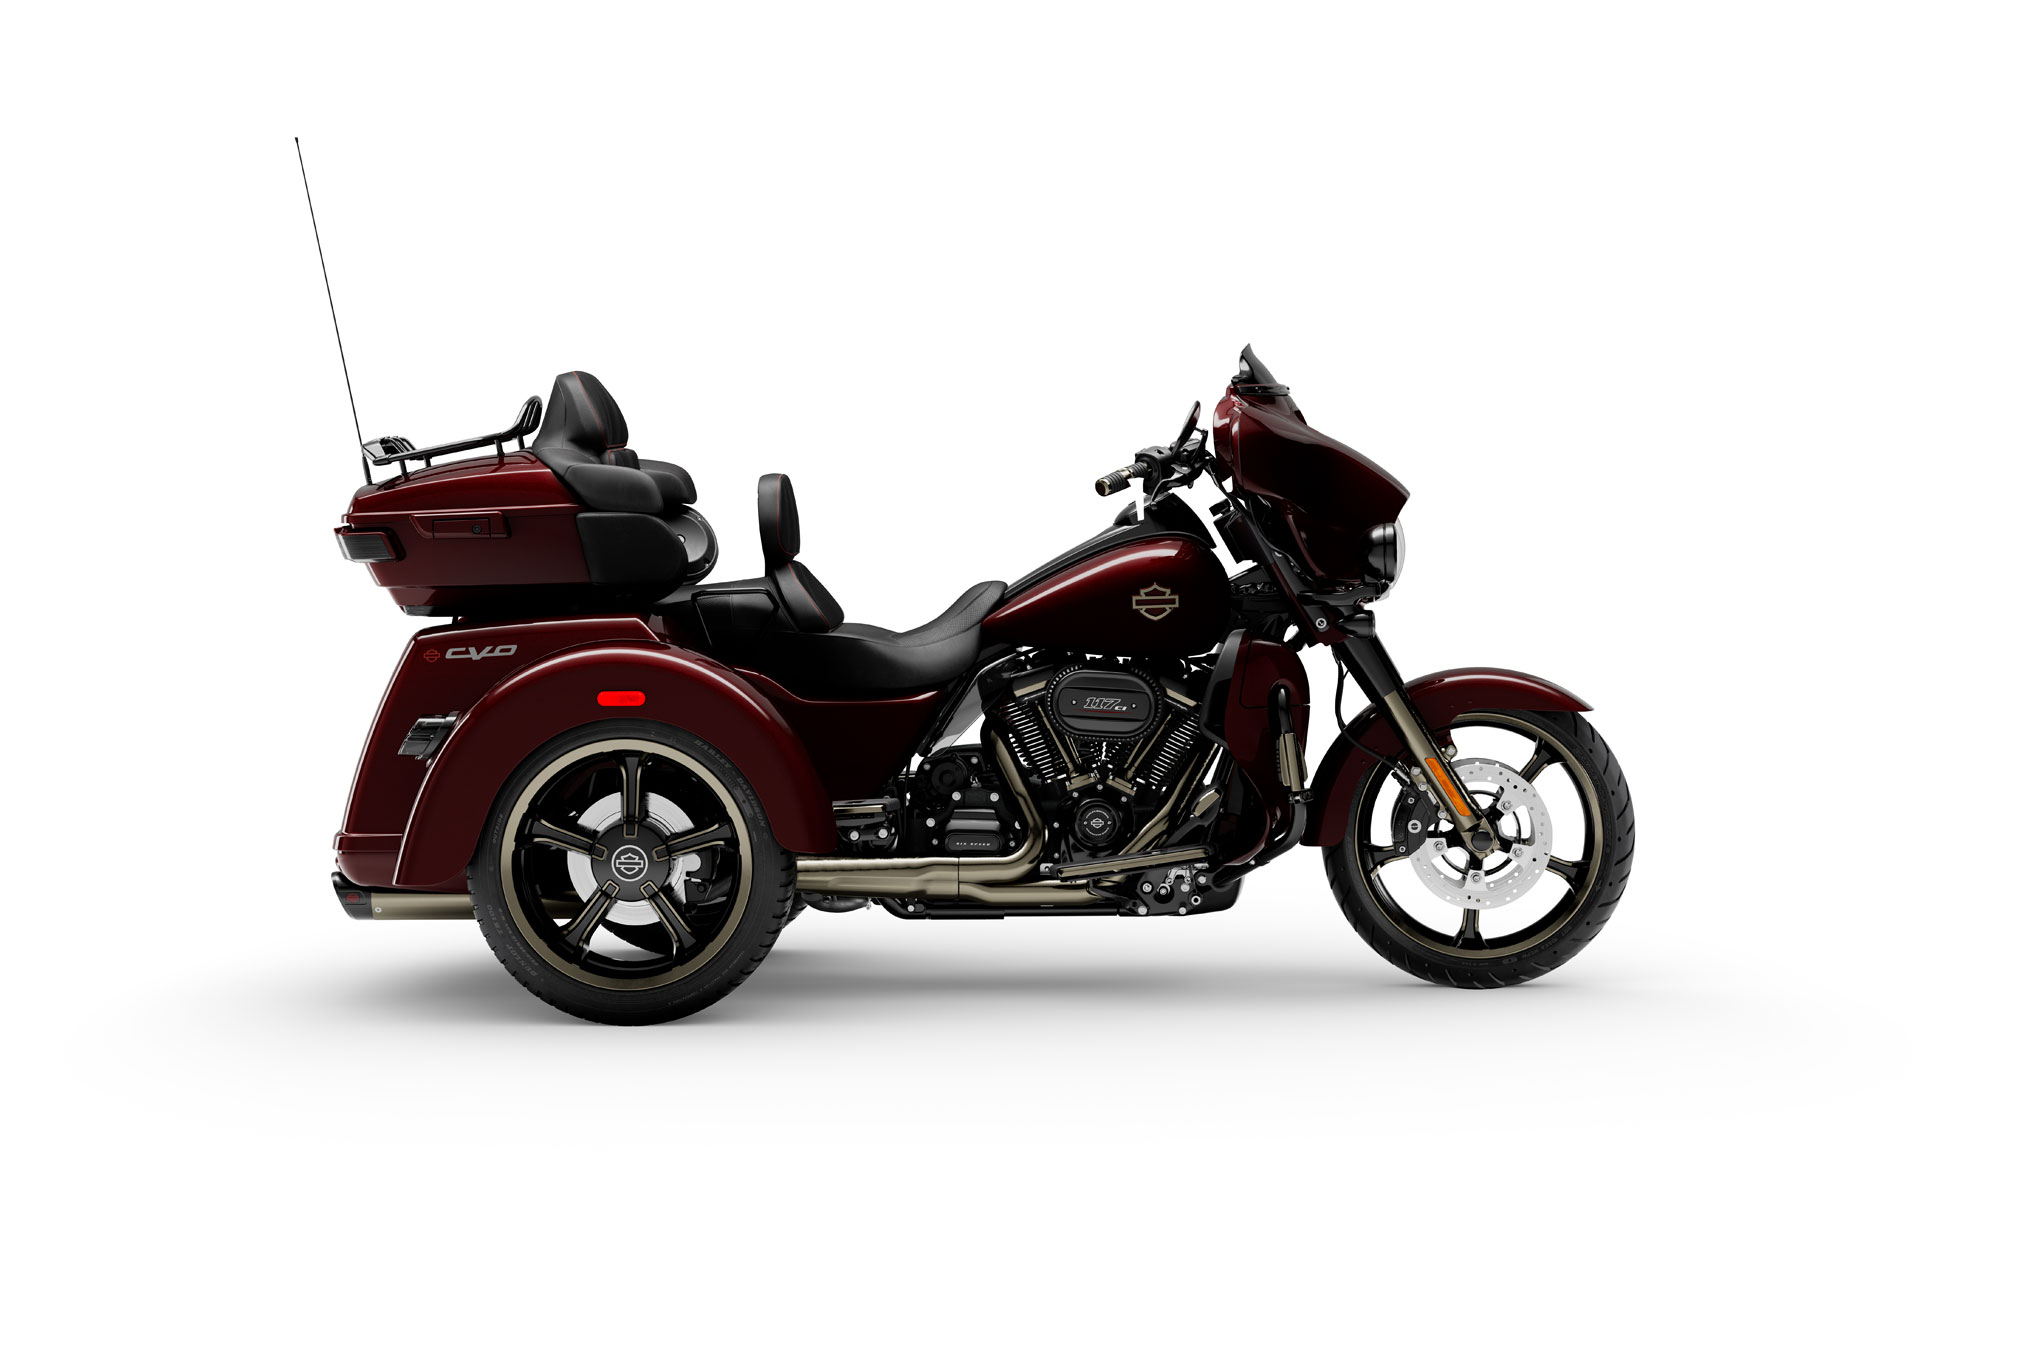 2021 Harley-Davidson CVO Tri Glide Guide • Total Motorcycle